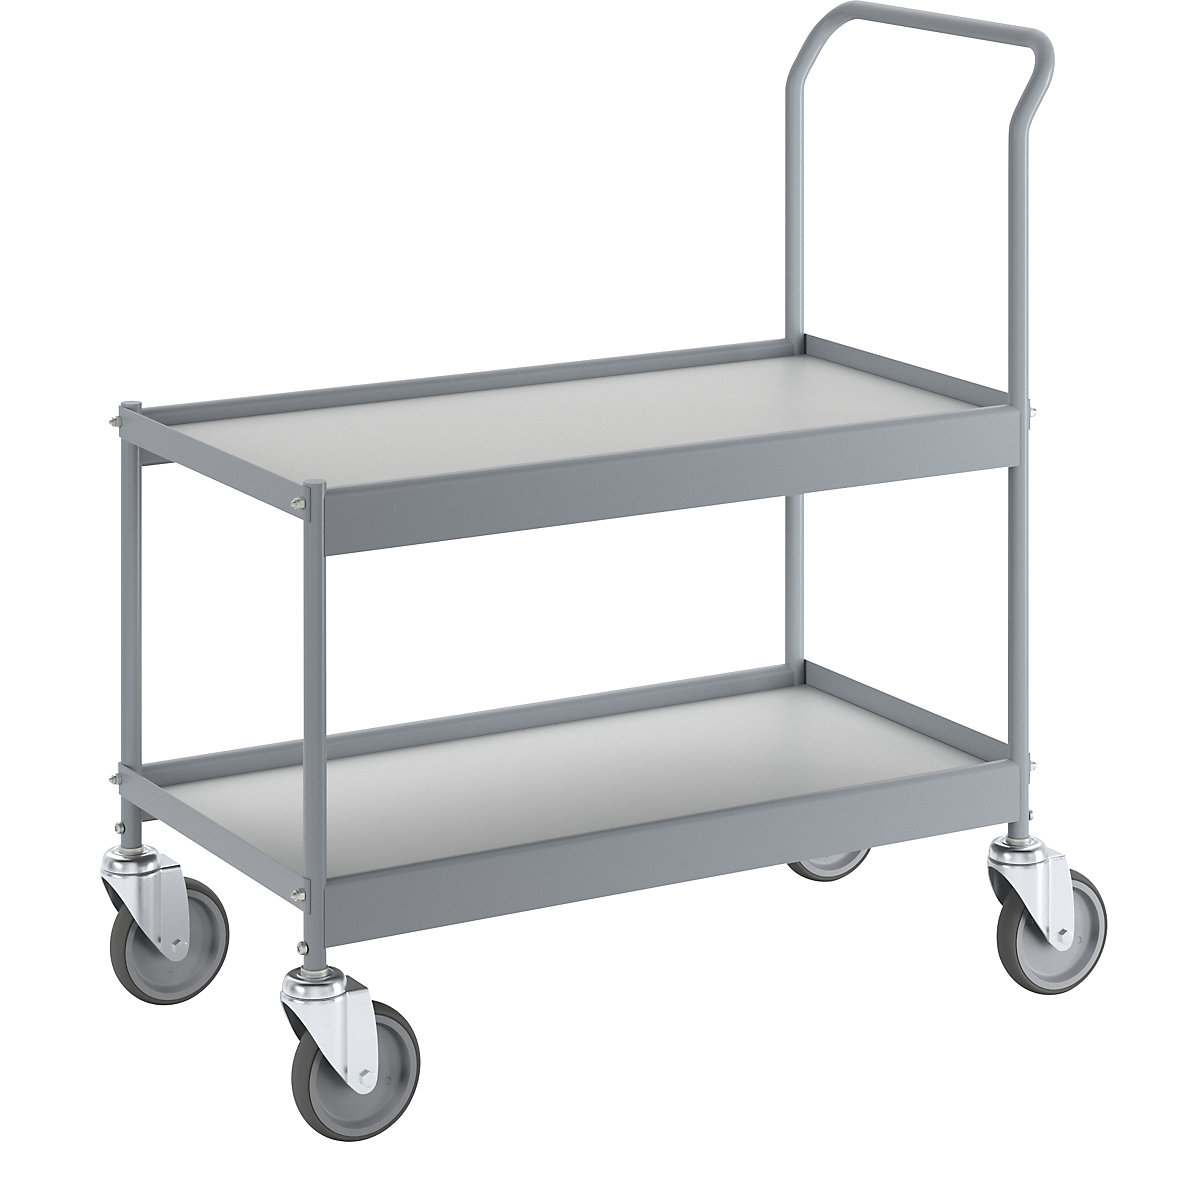 Table trolley, max. load 150 kg on 2 shelves, LxW 790 x 425 mm, 4 swivel castors-1